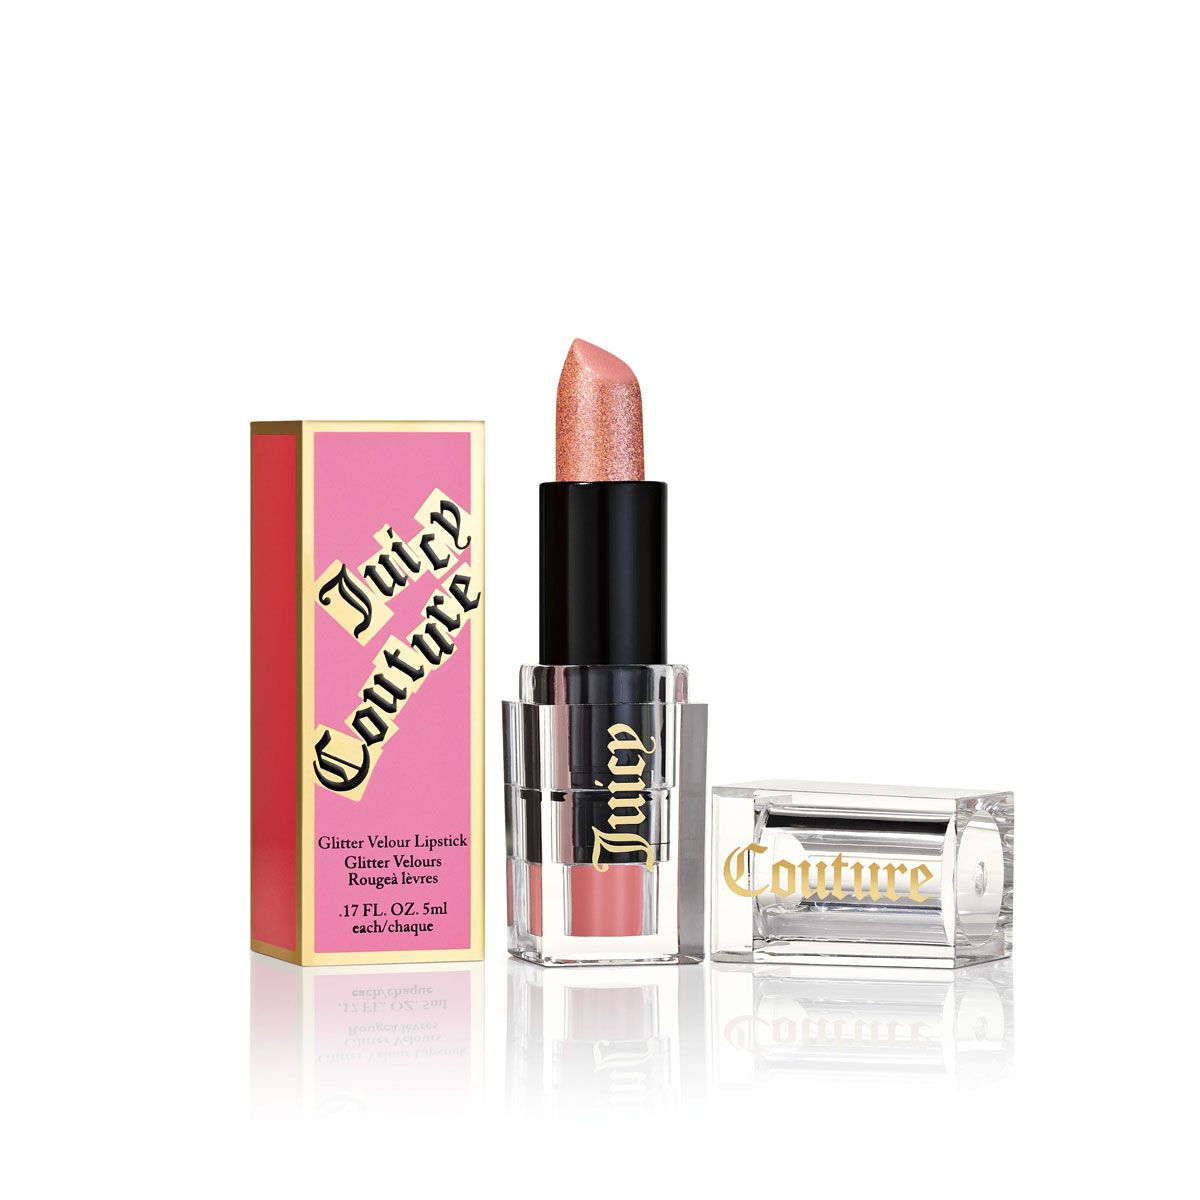 Juicy Couture Glitter Velour Lipstick